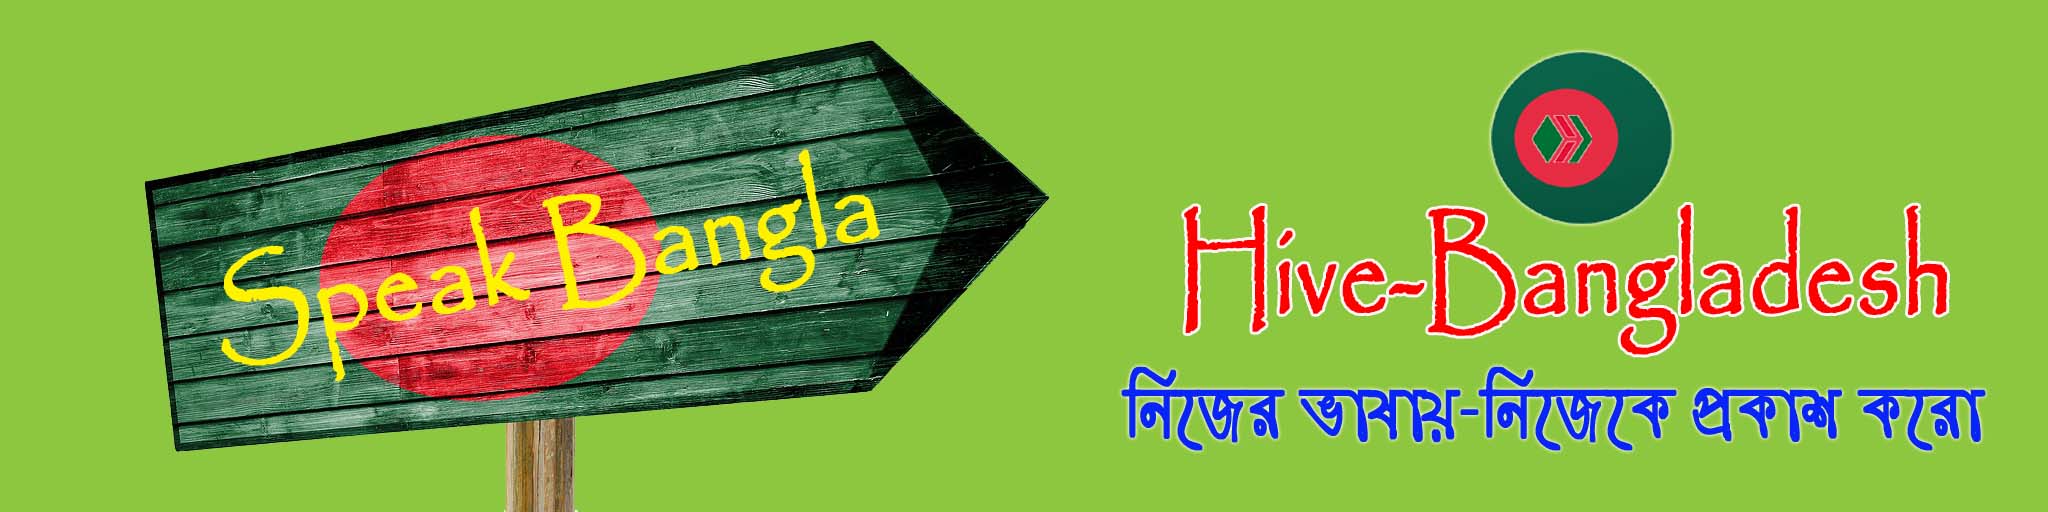 Hive Bangladesh-cover copy.jpg